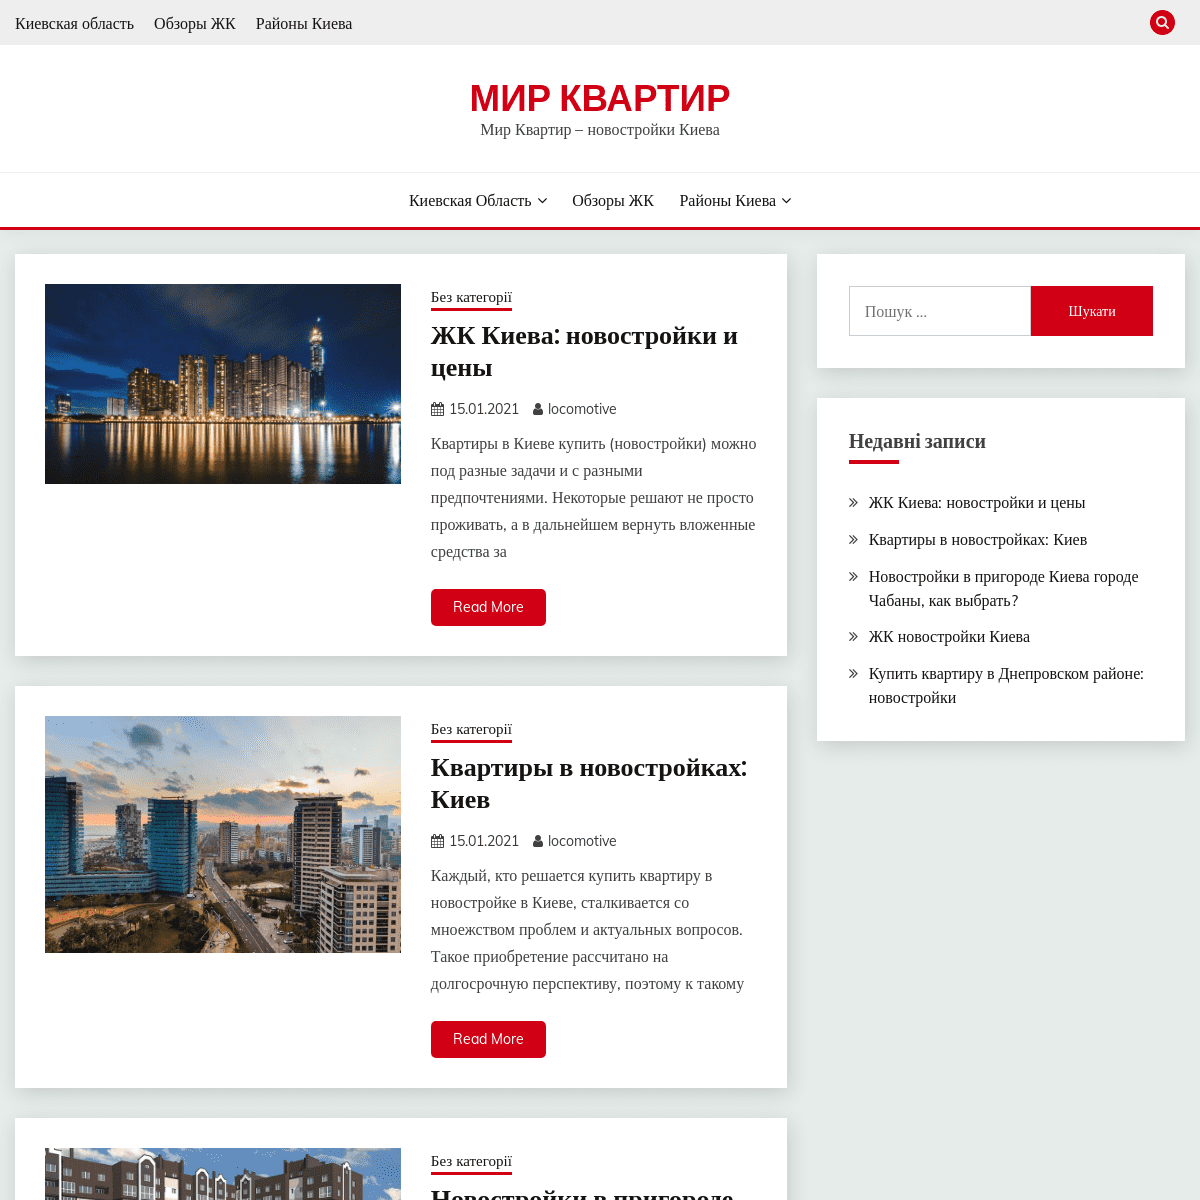 A complete backup of https://mir-kvartir.com.ua